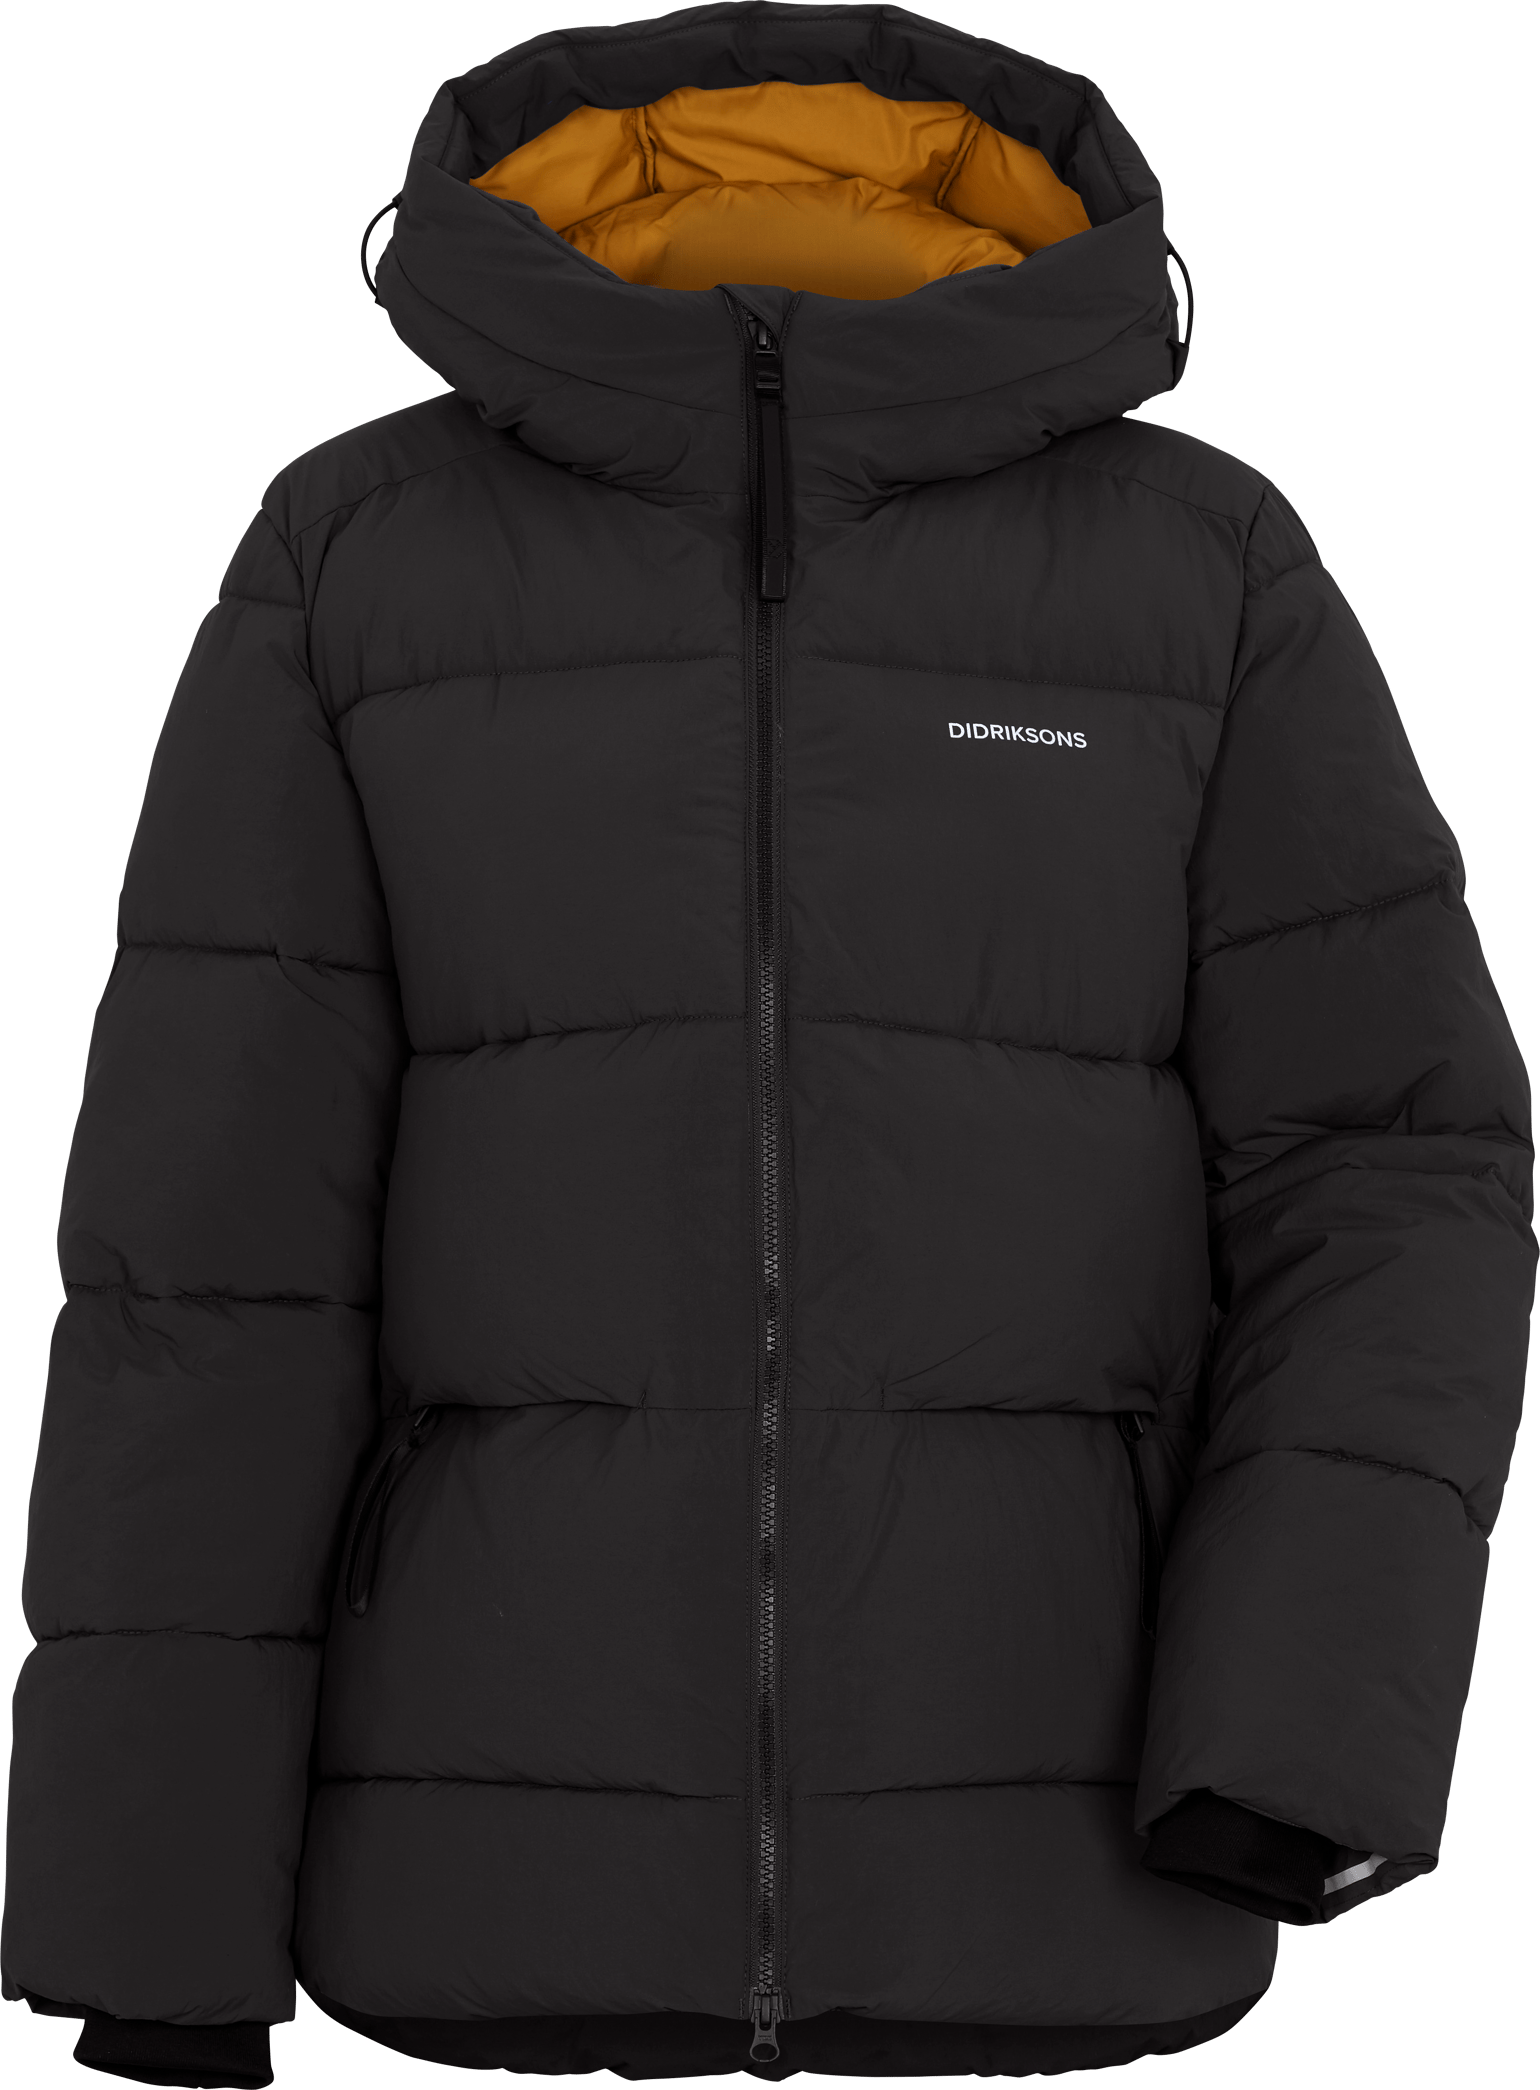 Nomi Women's Jacket 2 Black